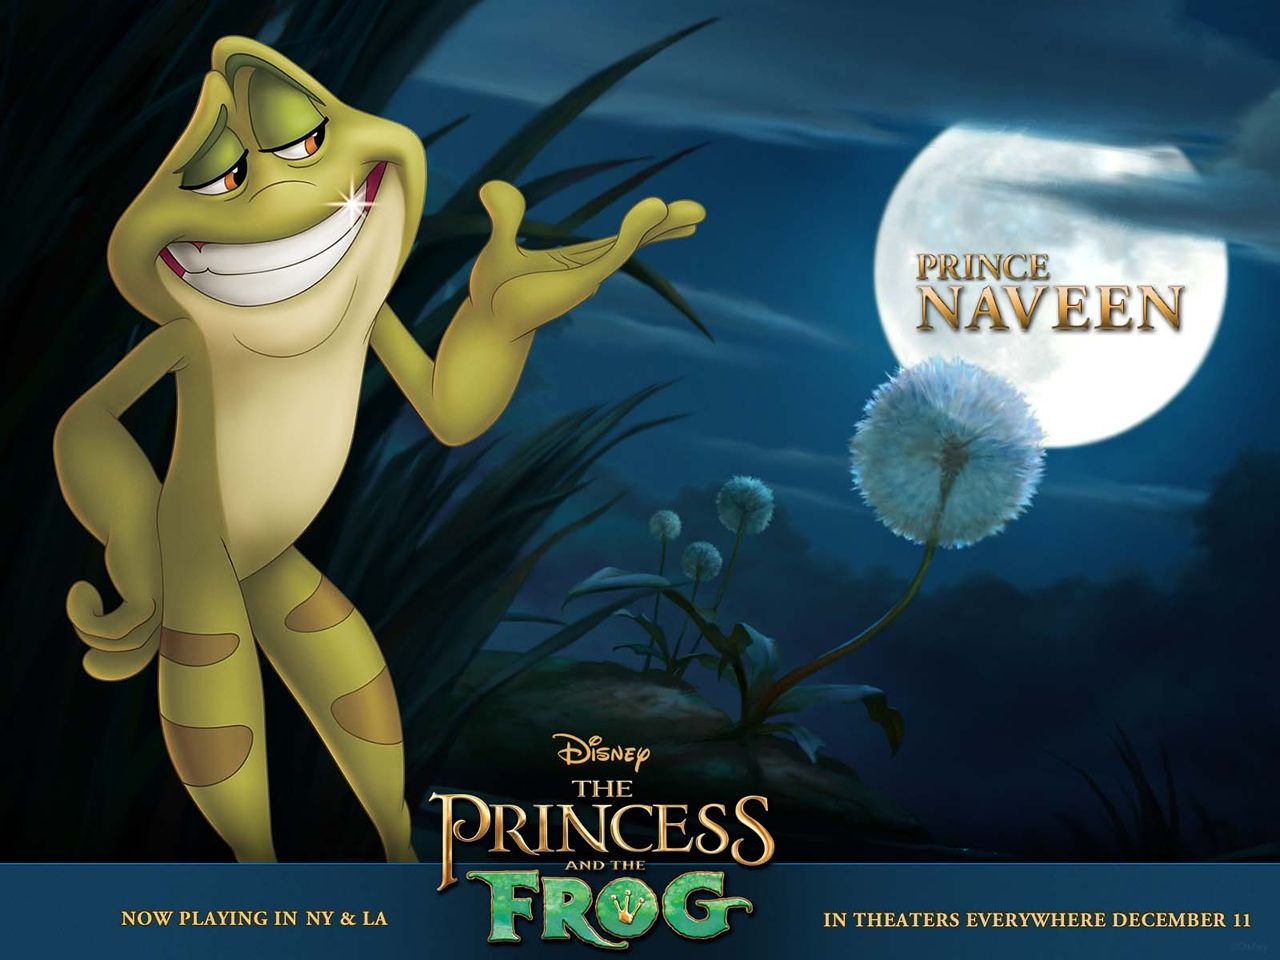 "The Princess and the Frog: Prince Naveen" desktop wallpaper (1280 x 960 pixels)